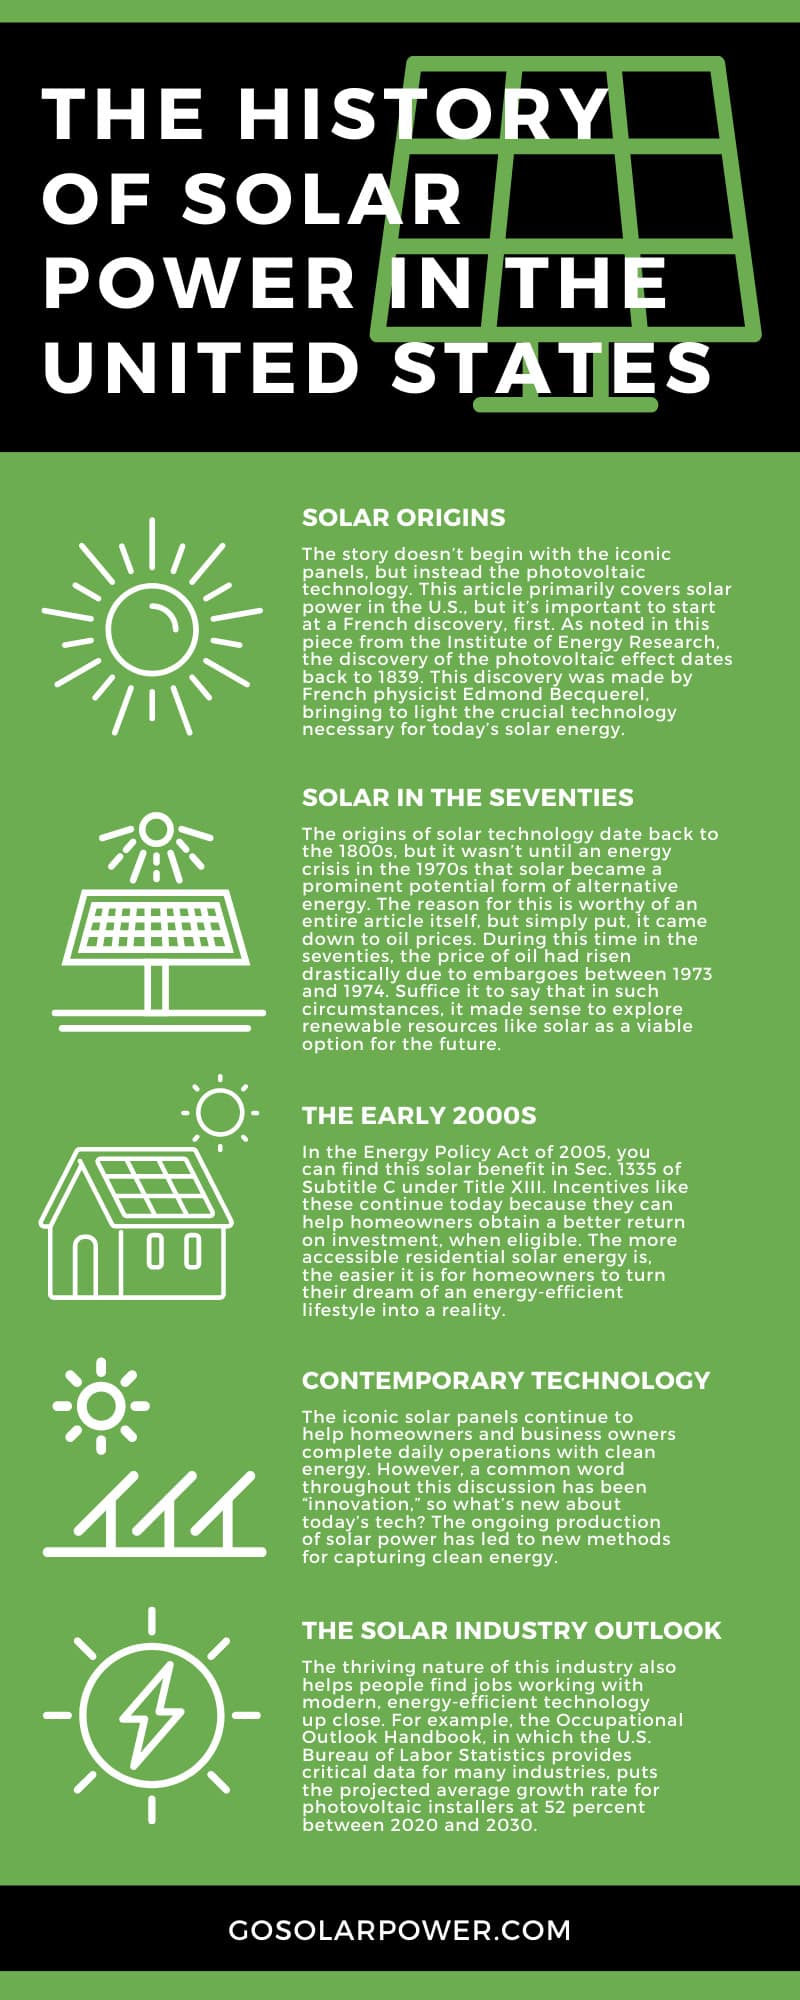 How Do Season Changes Affect Solar Panels?